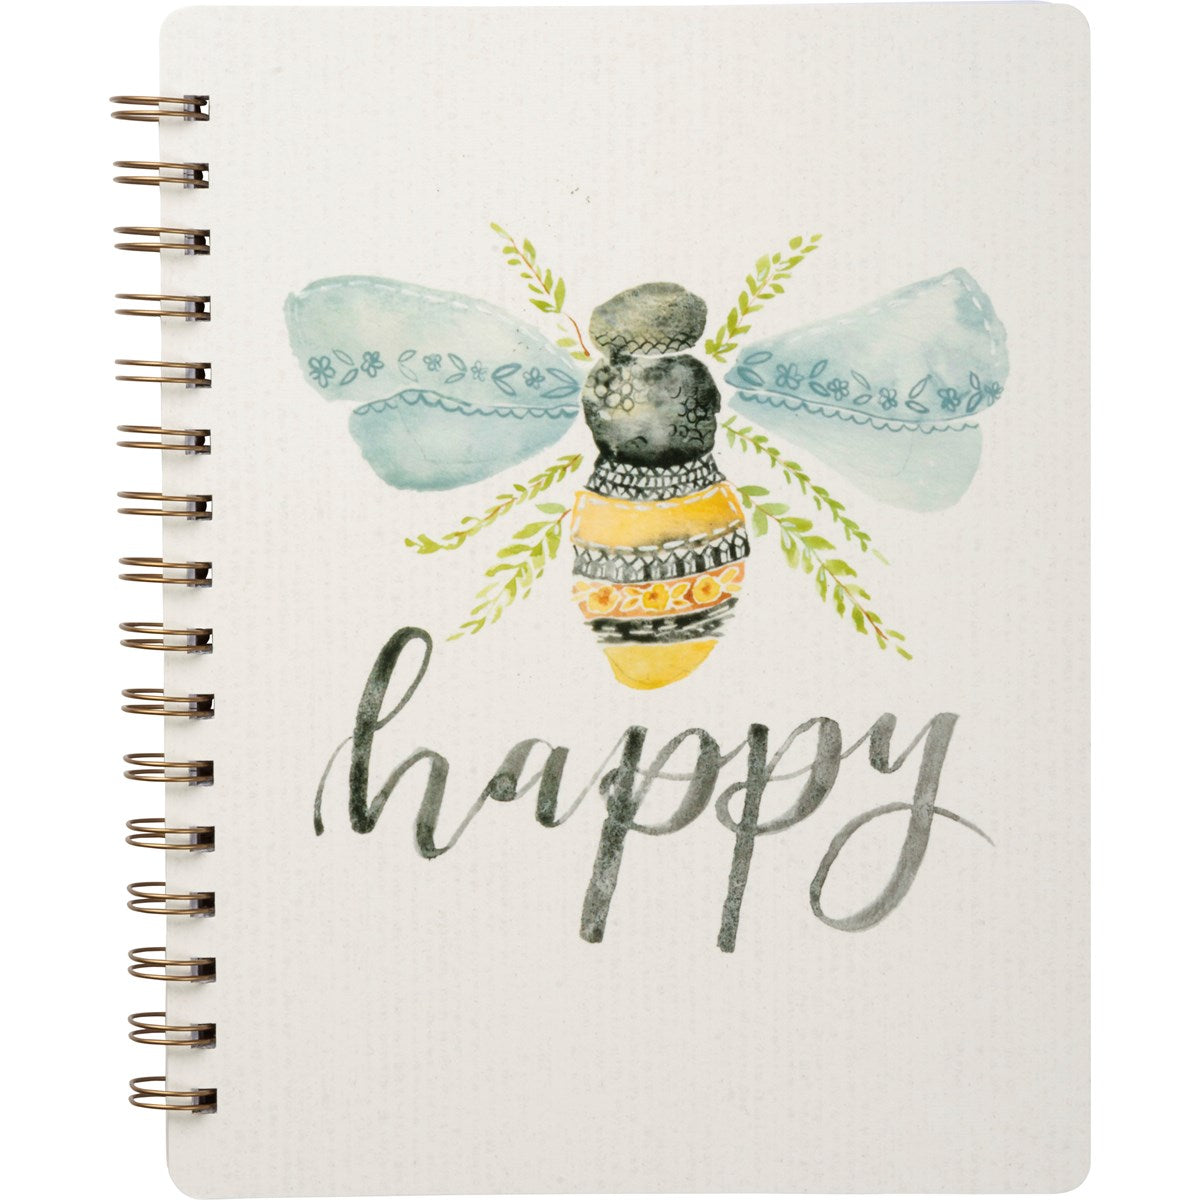 Bee Happy - Spiral Notebook